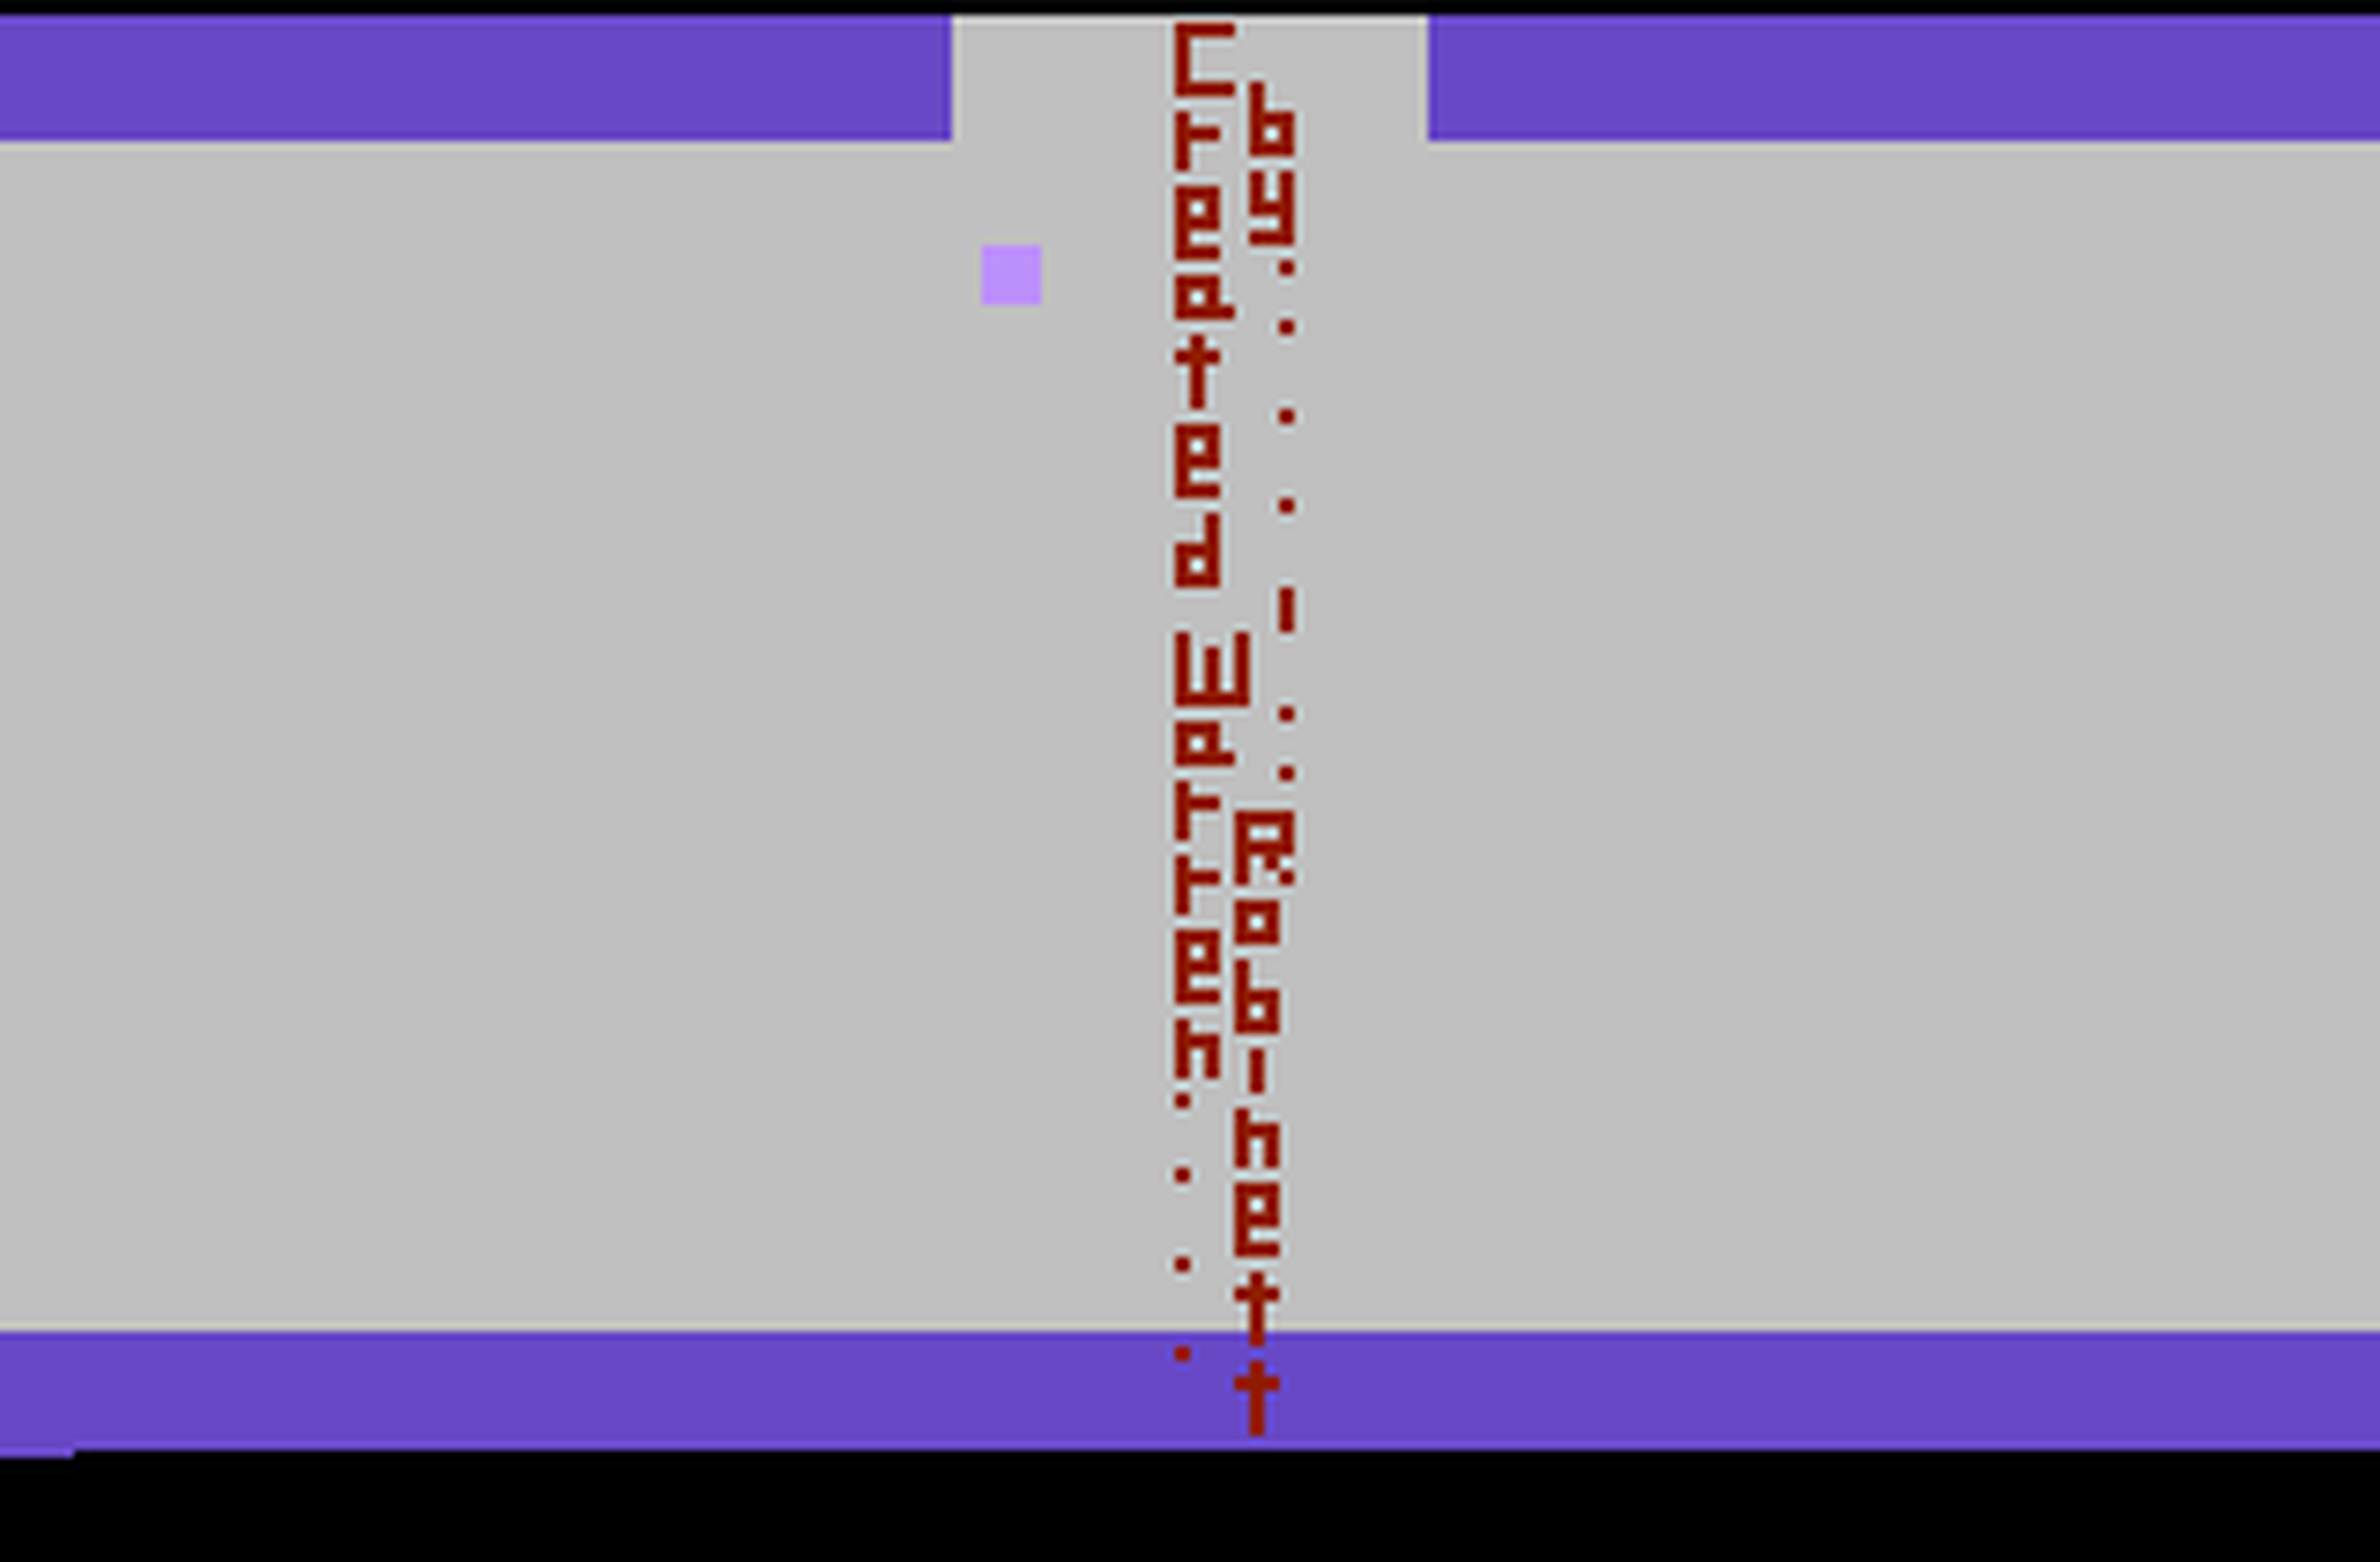 Adventure de Atari 2600